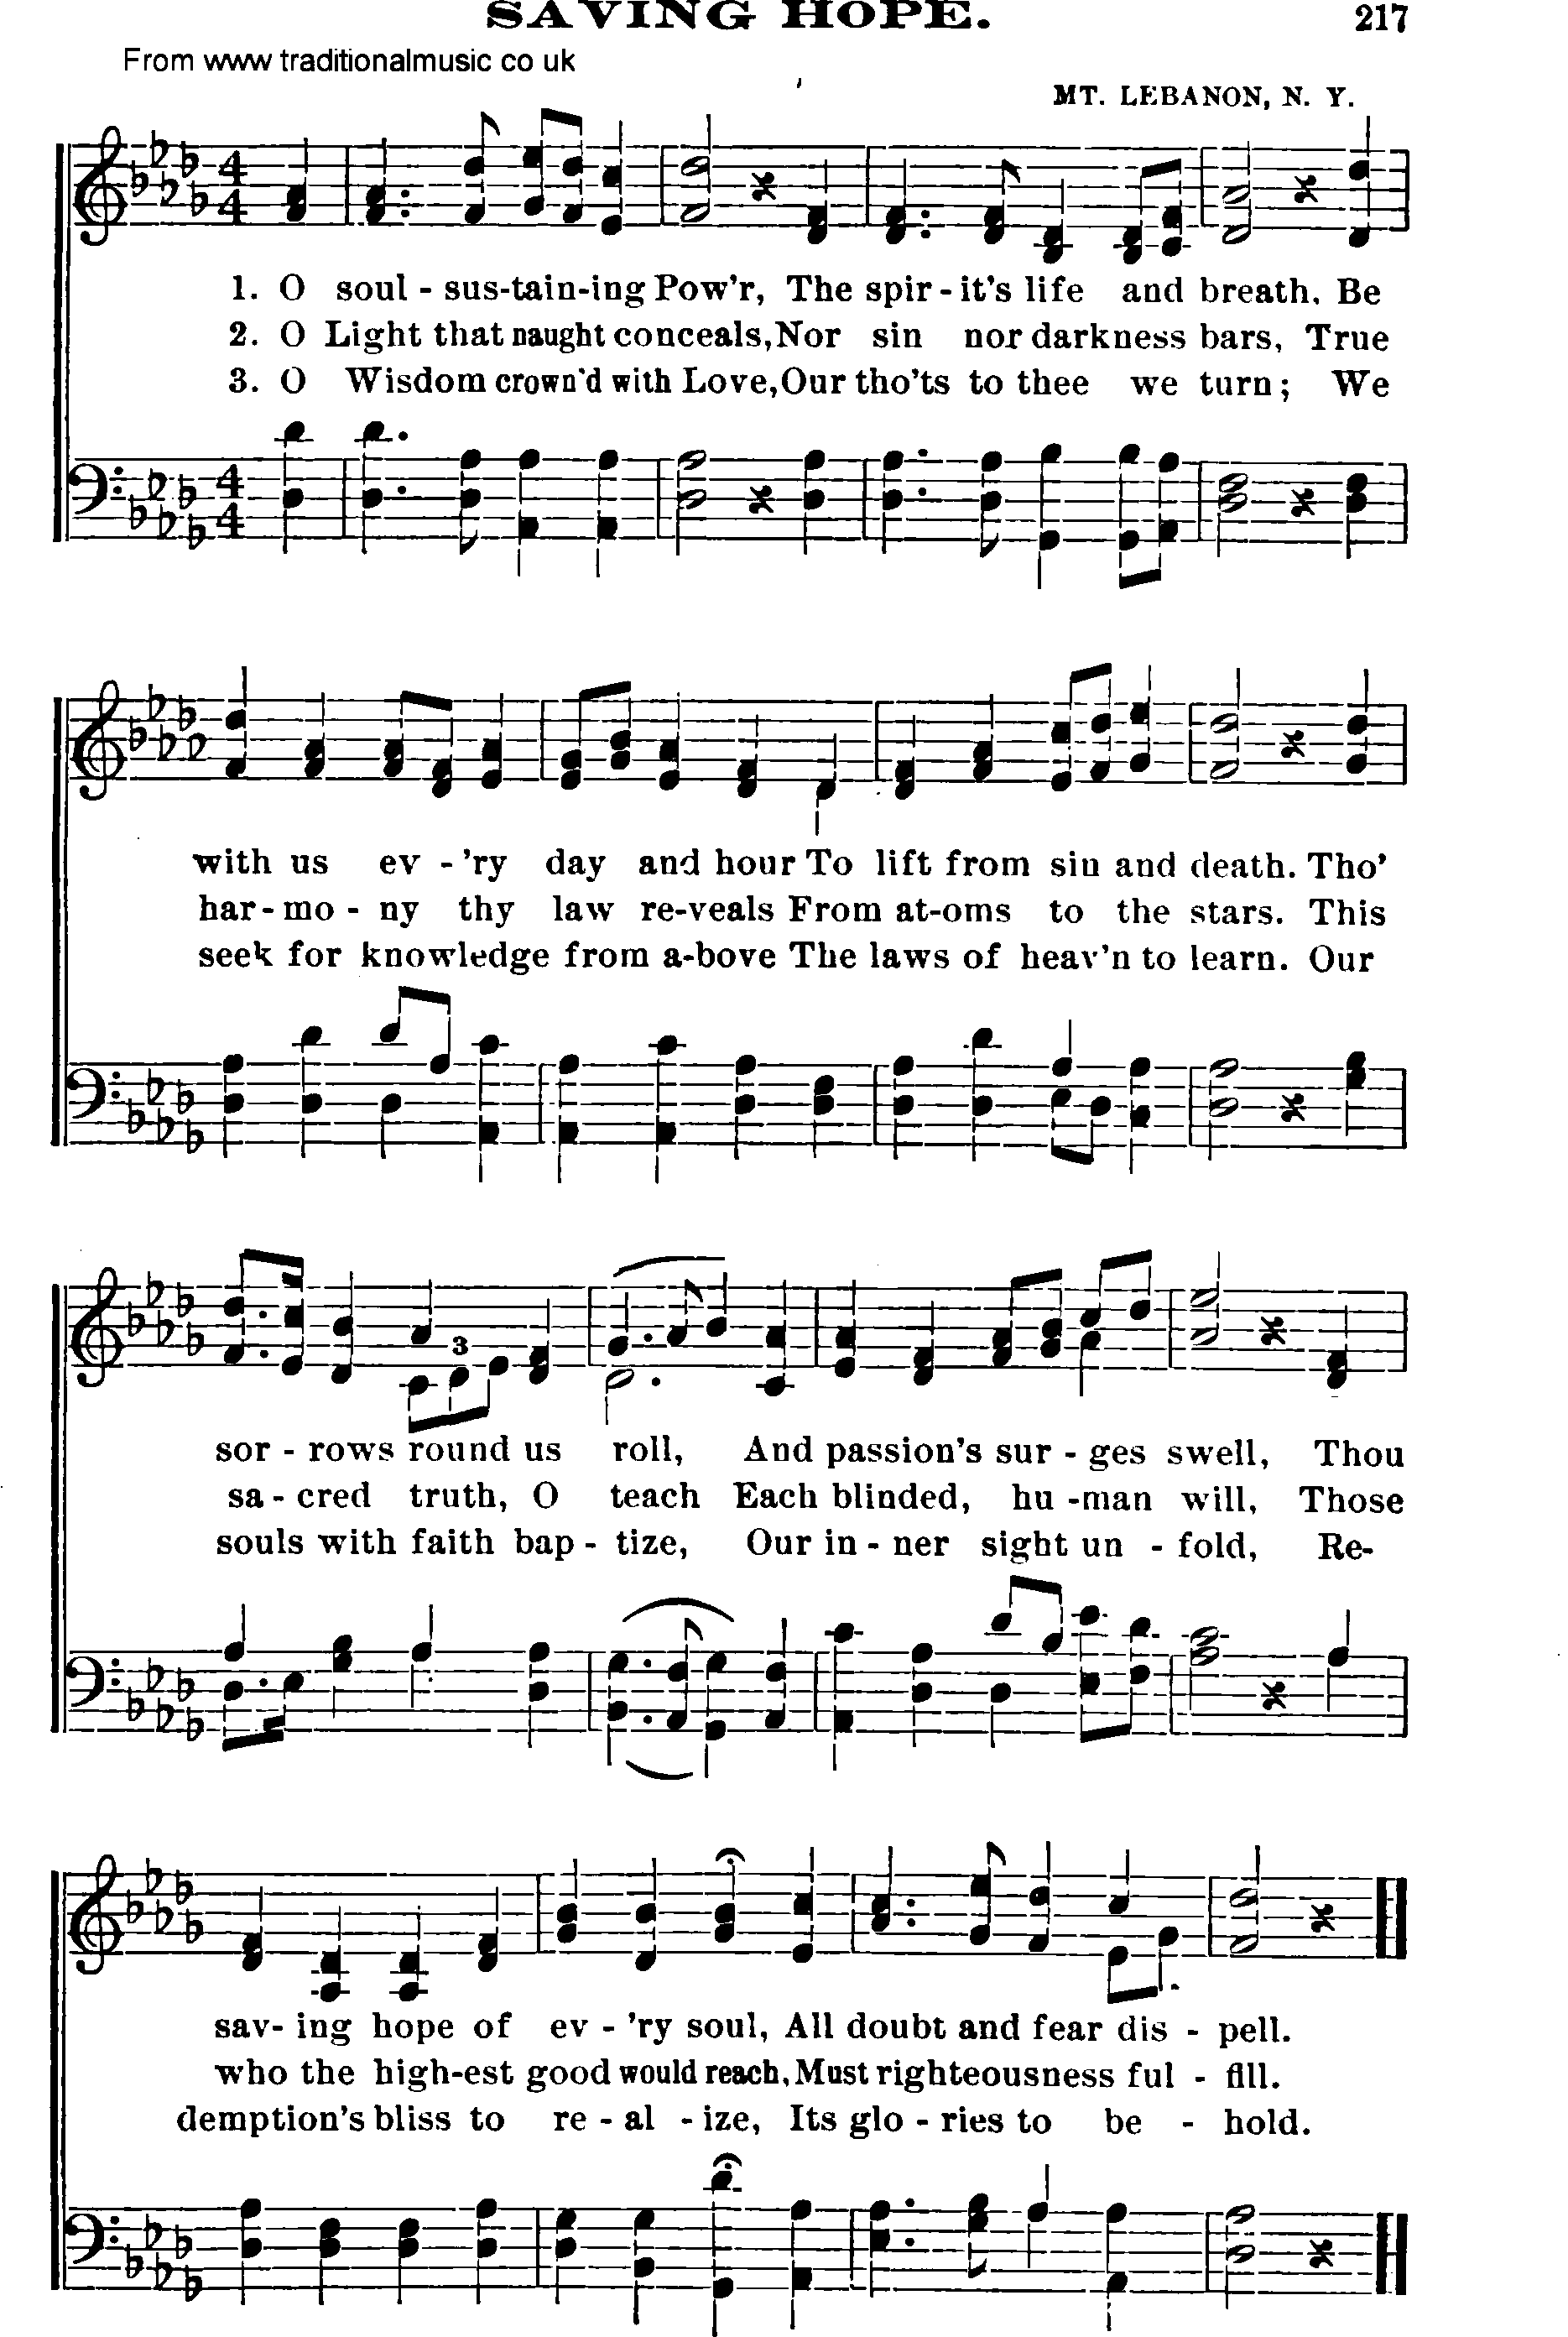 Shaker Music collection, Hymn: saving hope, sheetmusic and PDF